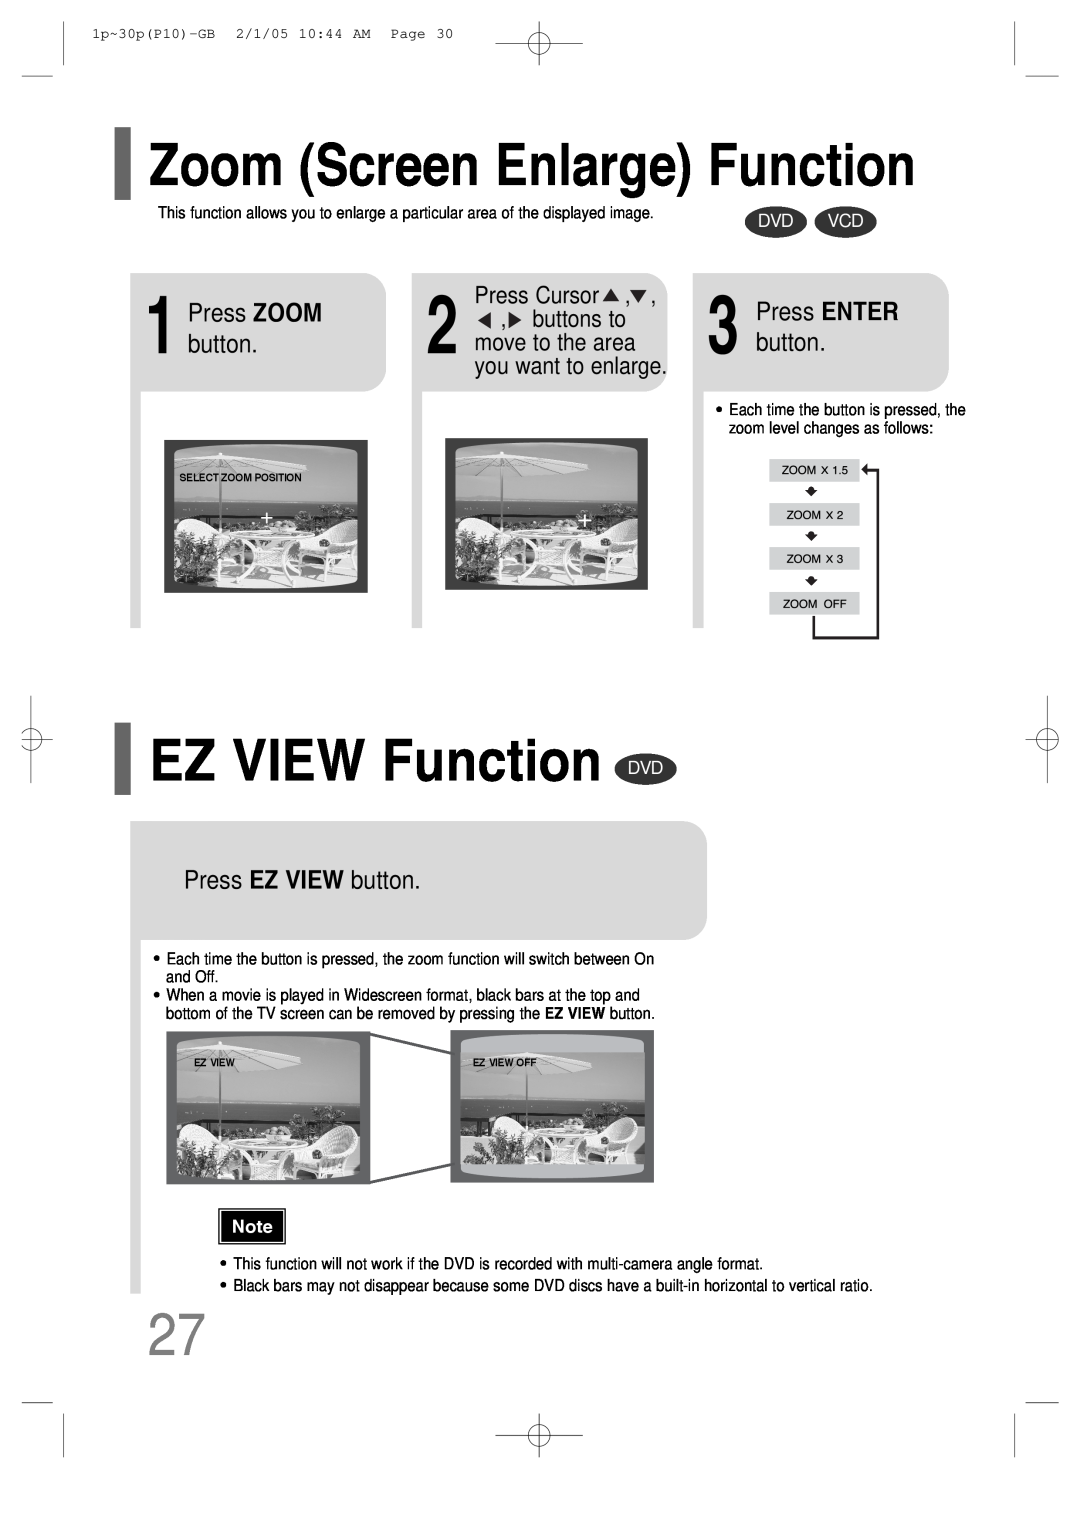 Samsung P10 instruction manual Zoom Screen Enlarge Function, EZ VIEW Function DVD, Press EZ VIEW button, Press ZOOM button 